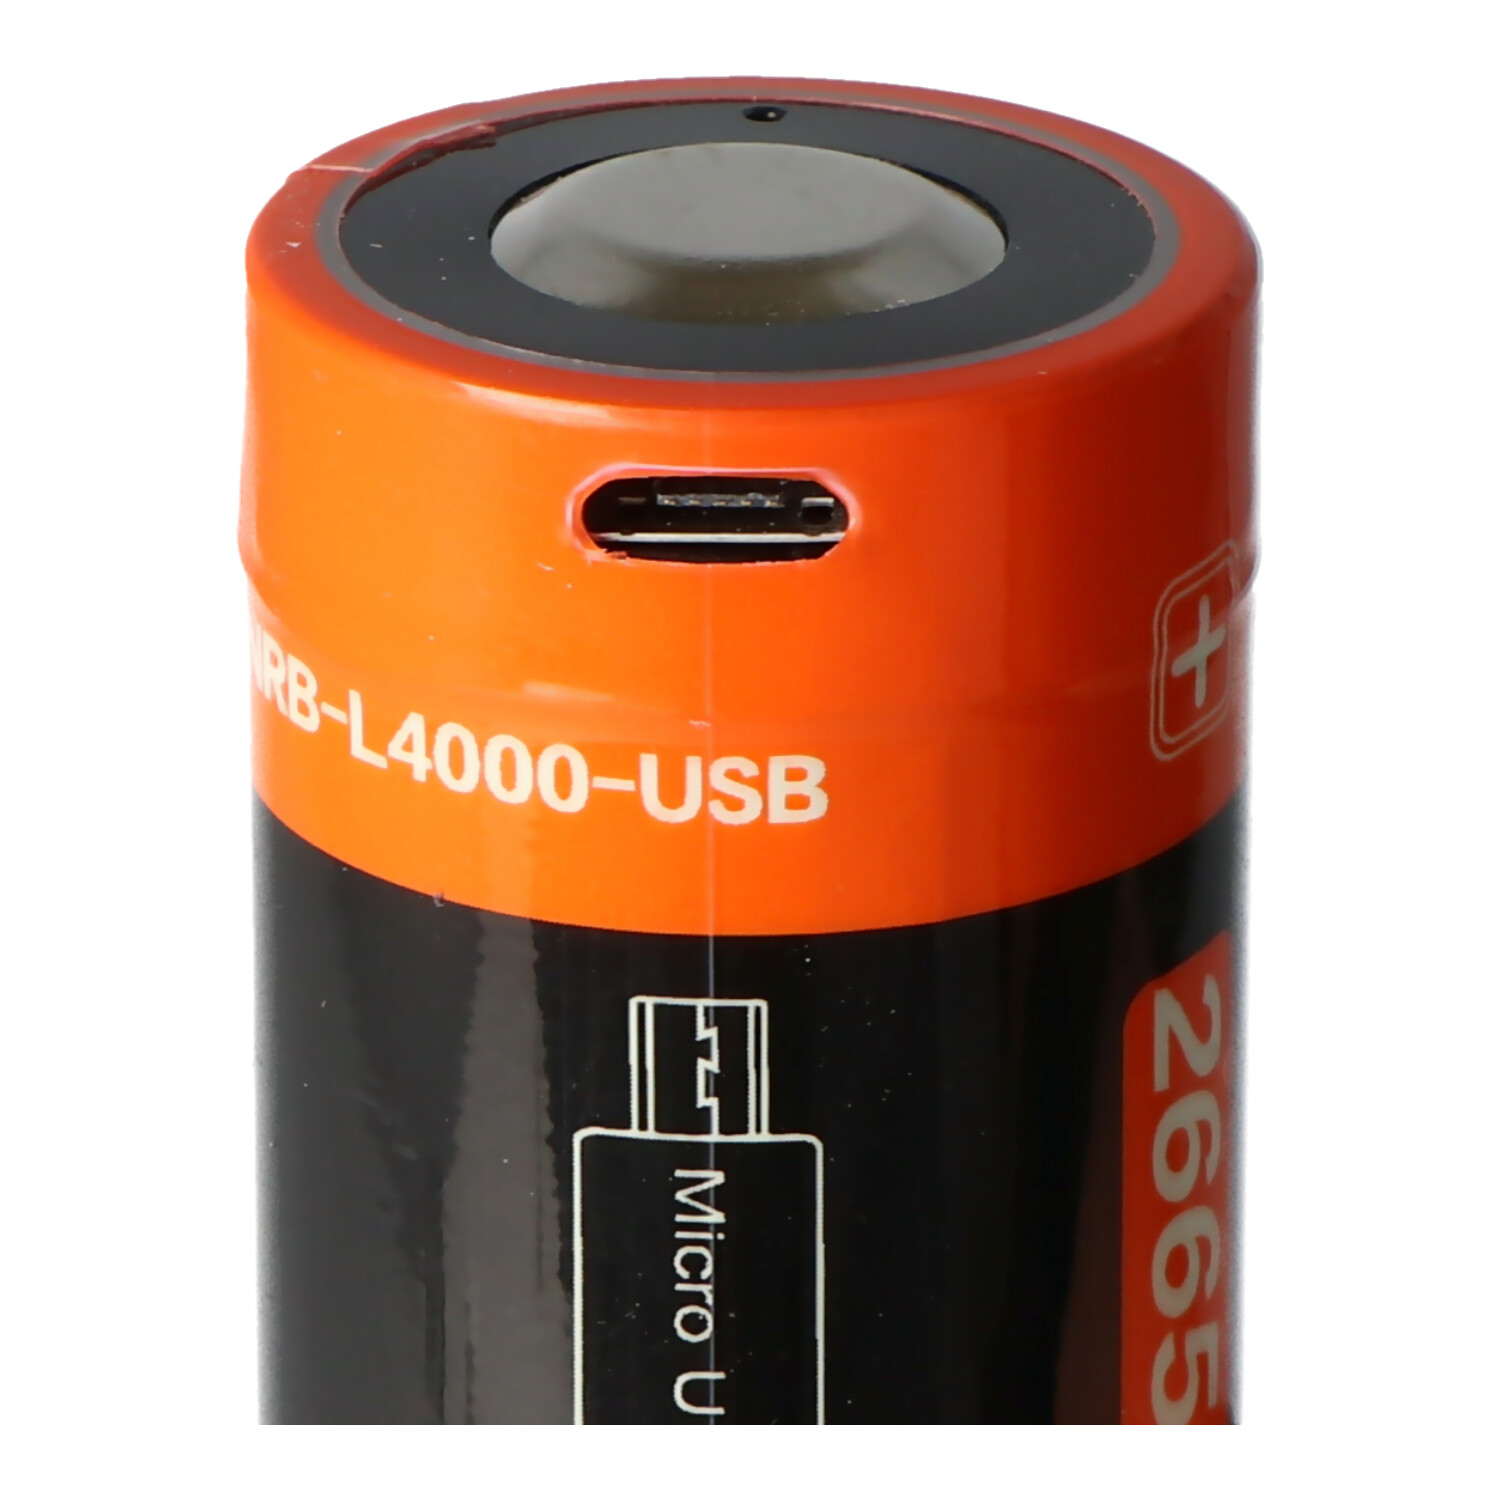 Rundzelle 26650, Li-ion, 3,7V, 4000mAh, 14,8Wh, mit USB-Ladeanschluss, 72 x 26,2mm Abmessungen